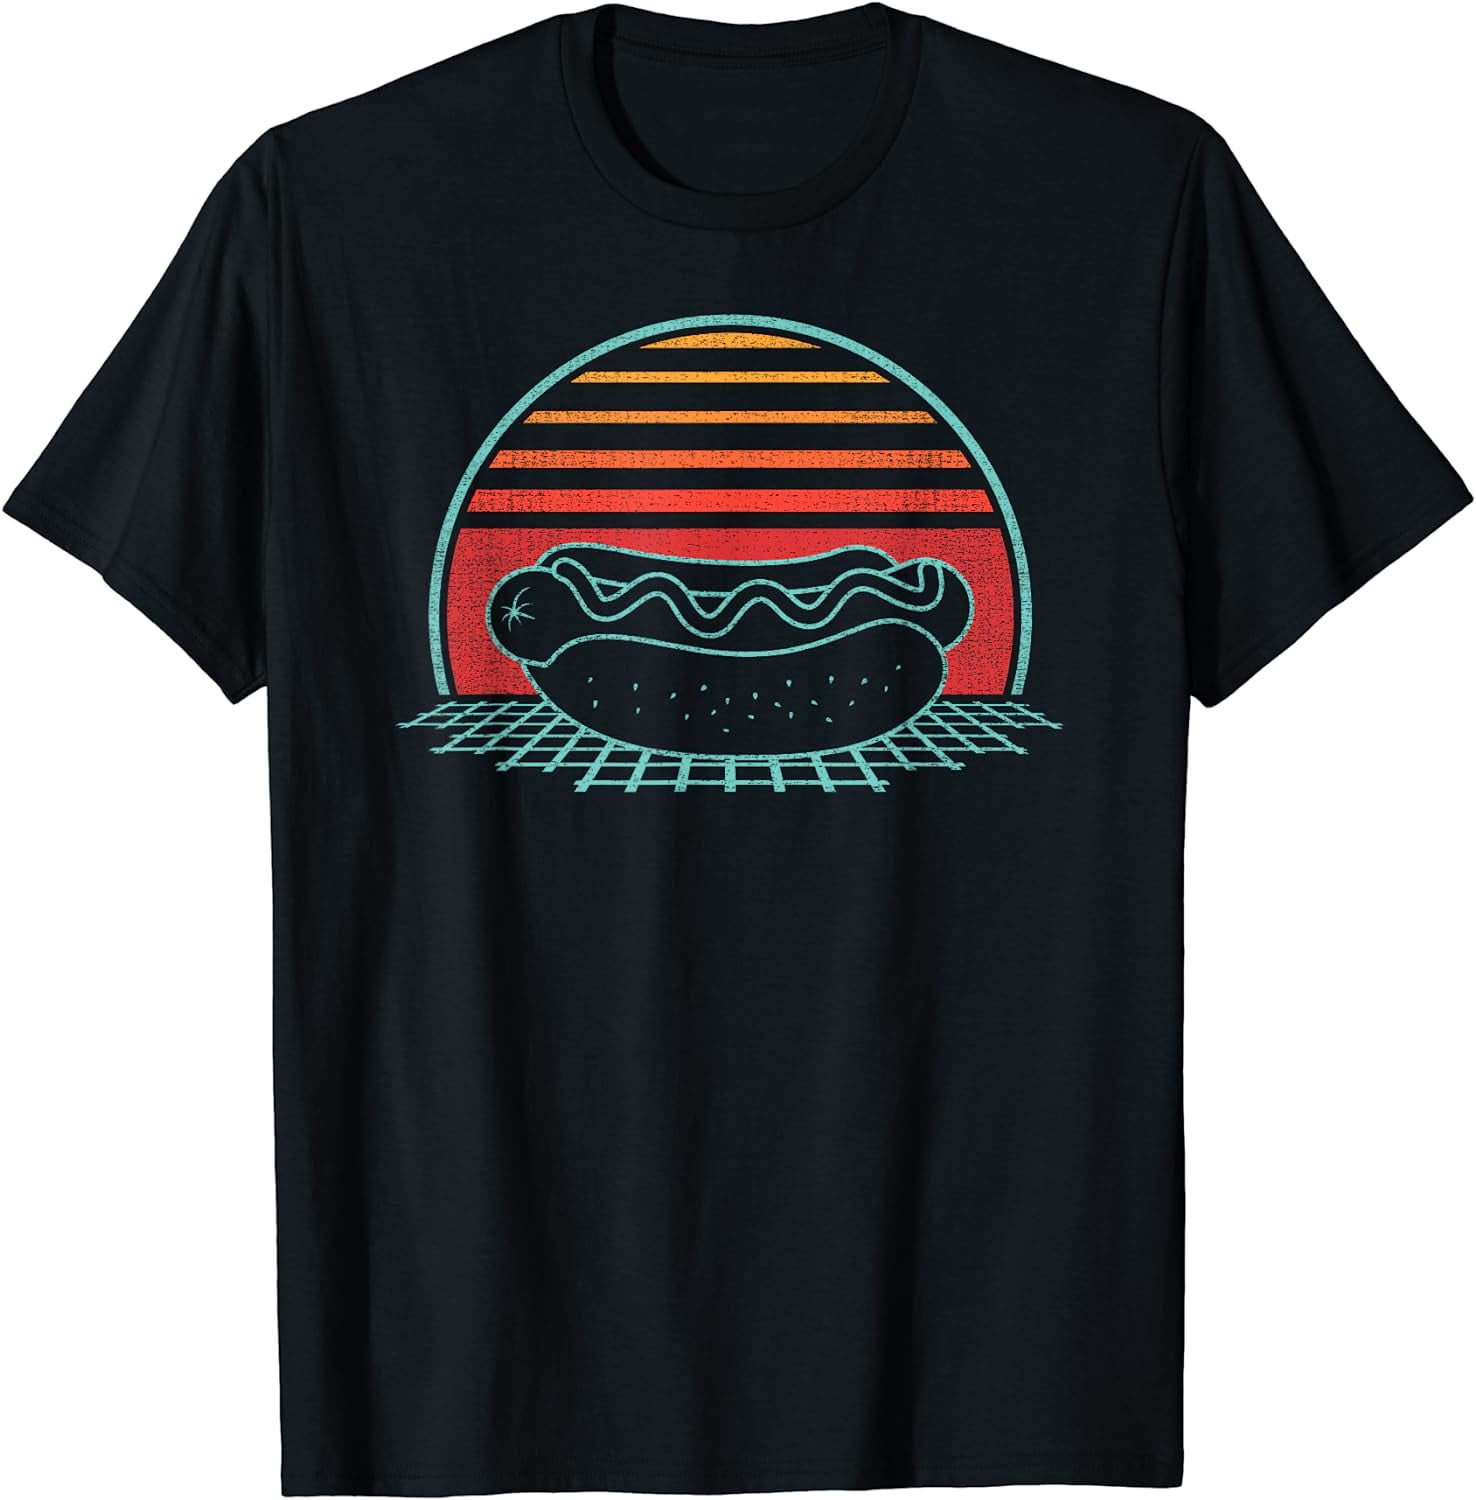 Hot Dog Retro Vintage 80s Style Gift T-Shirt - Walmart.com